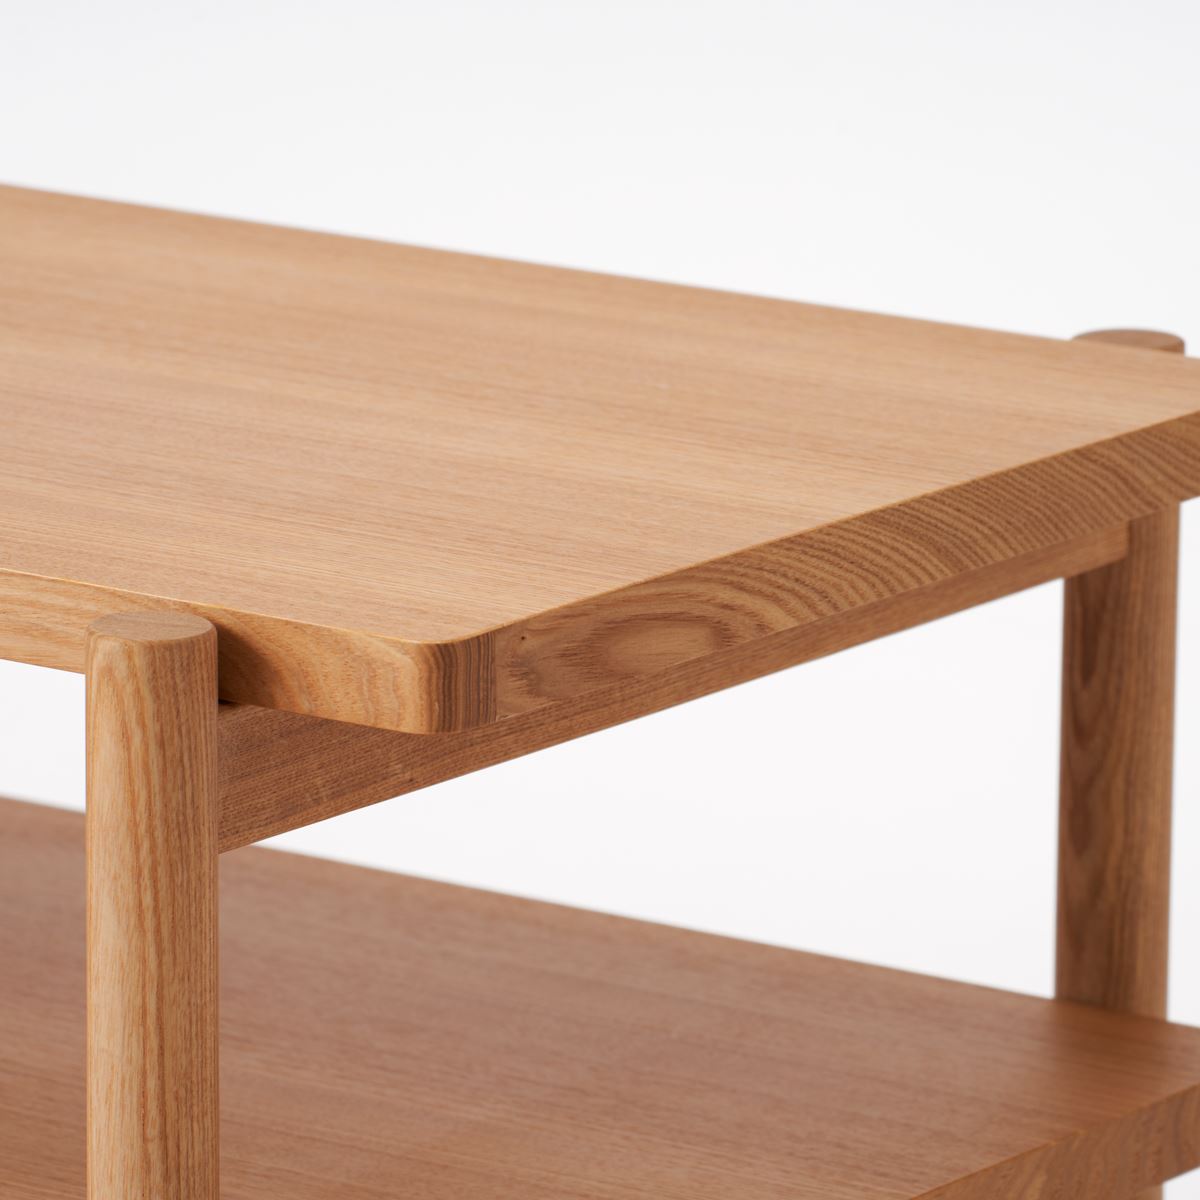 Living Table - Wooden Frame / リビング テーブル